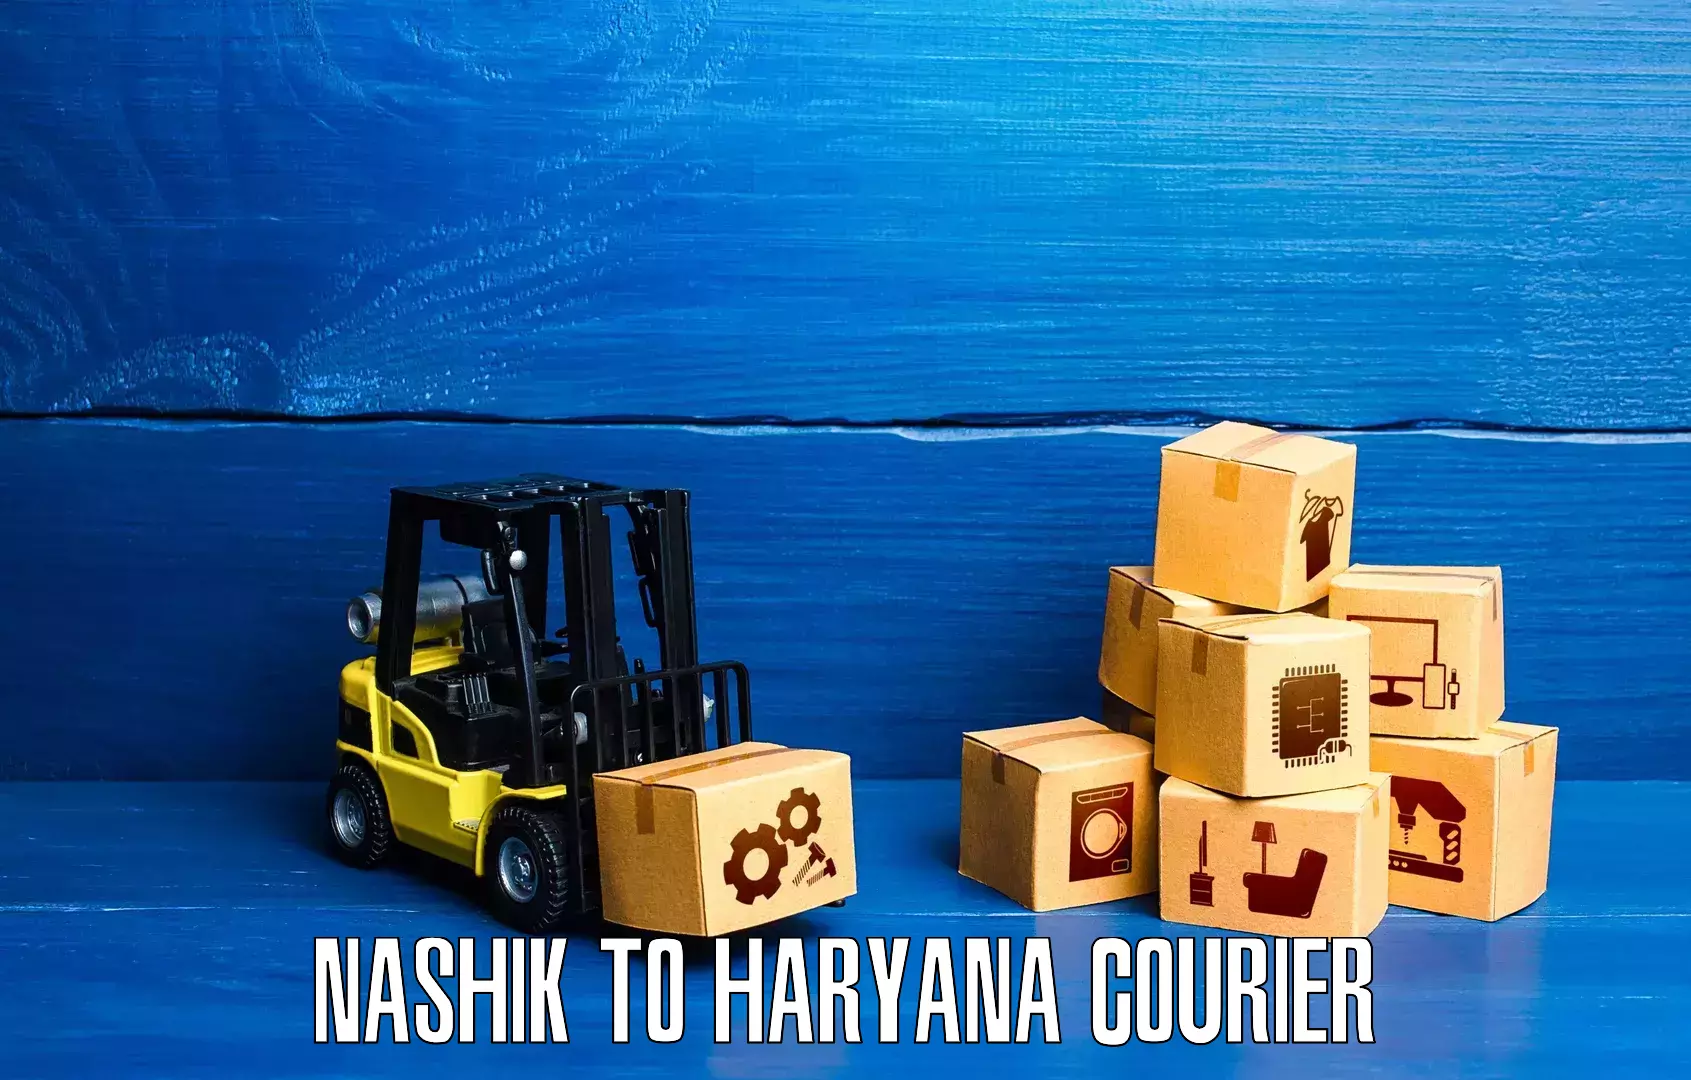 Courier service efficiency Nashik to Haryana